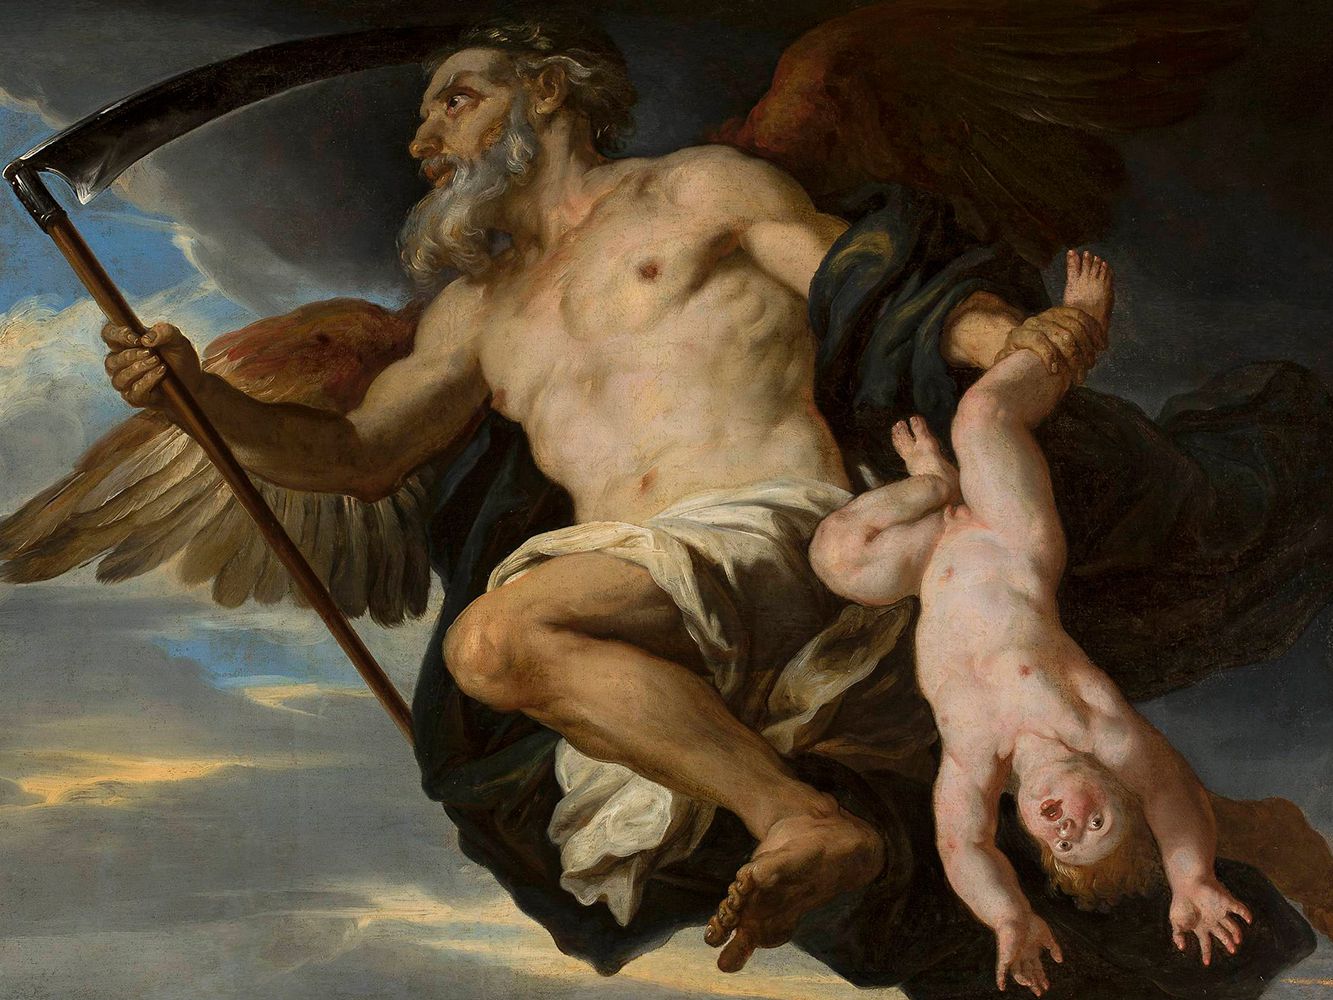 Kronos Mythology: Learn More About the Greek God